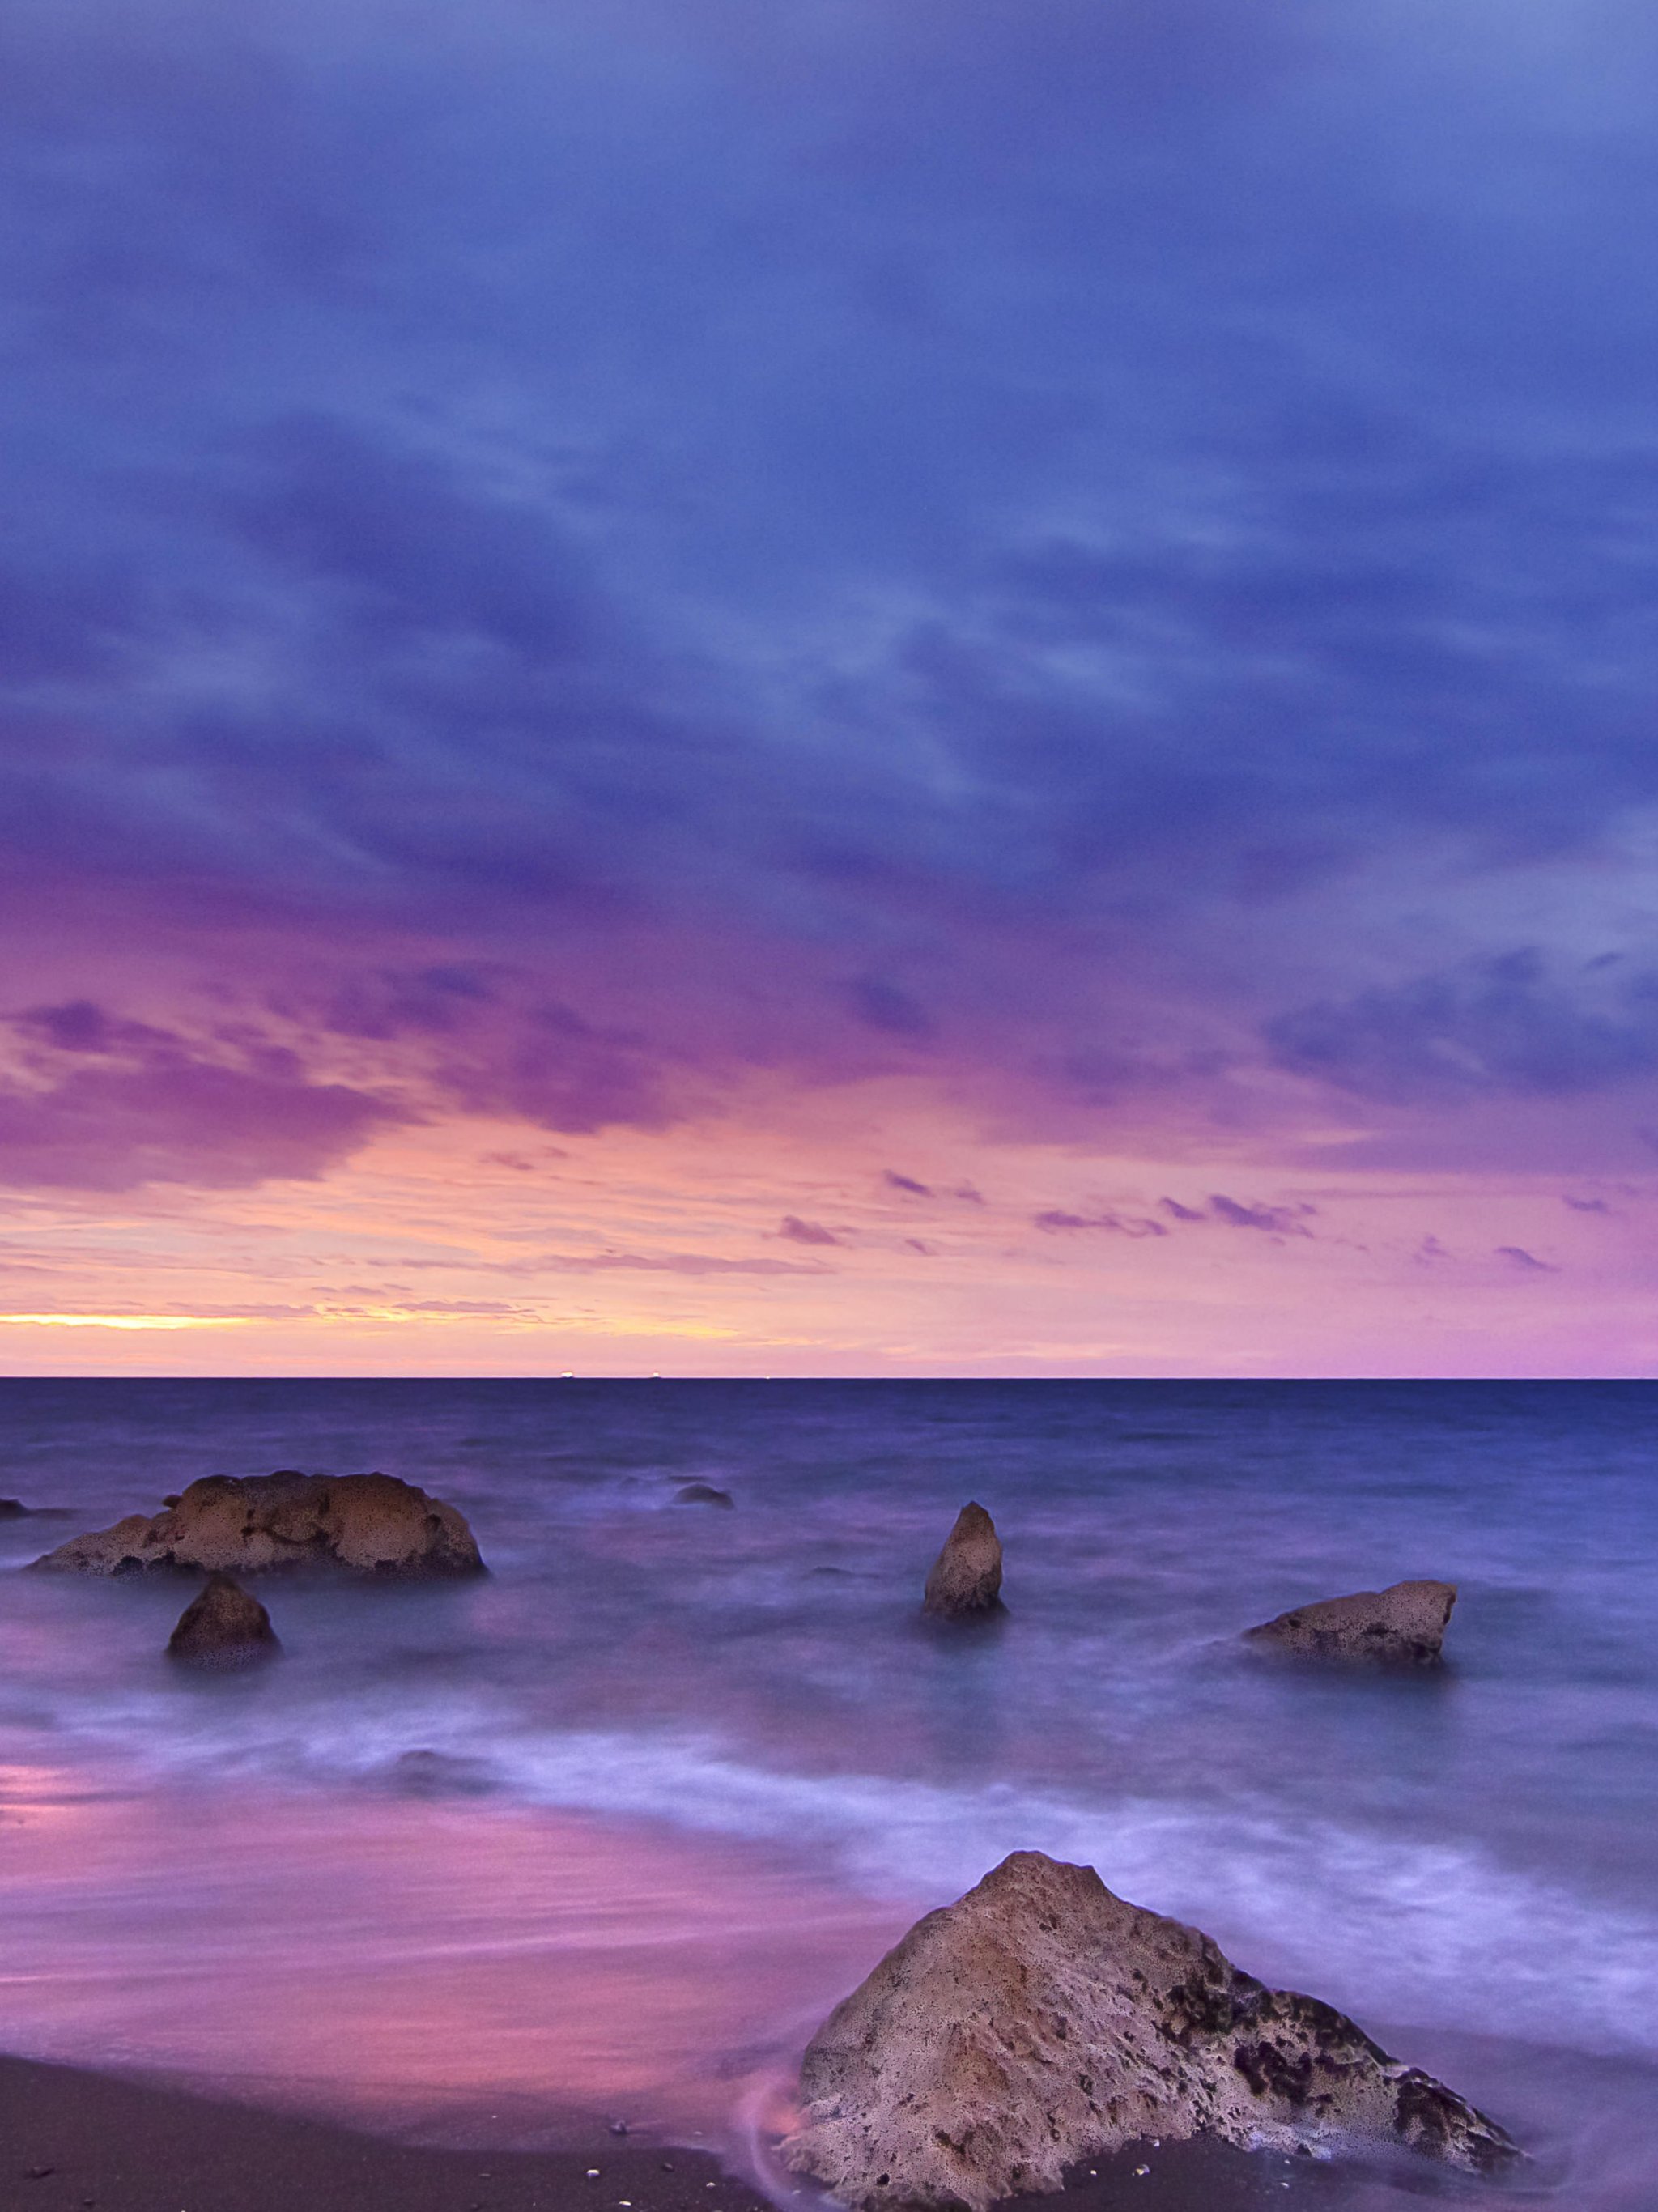 Ocean Sunset Wallpaper - iPhone, Android & Desktop Backgrounds